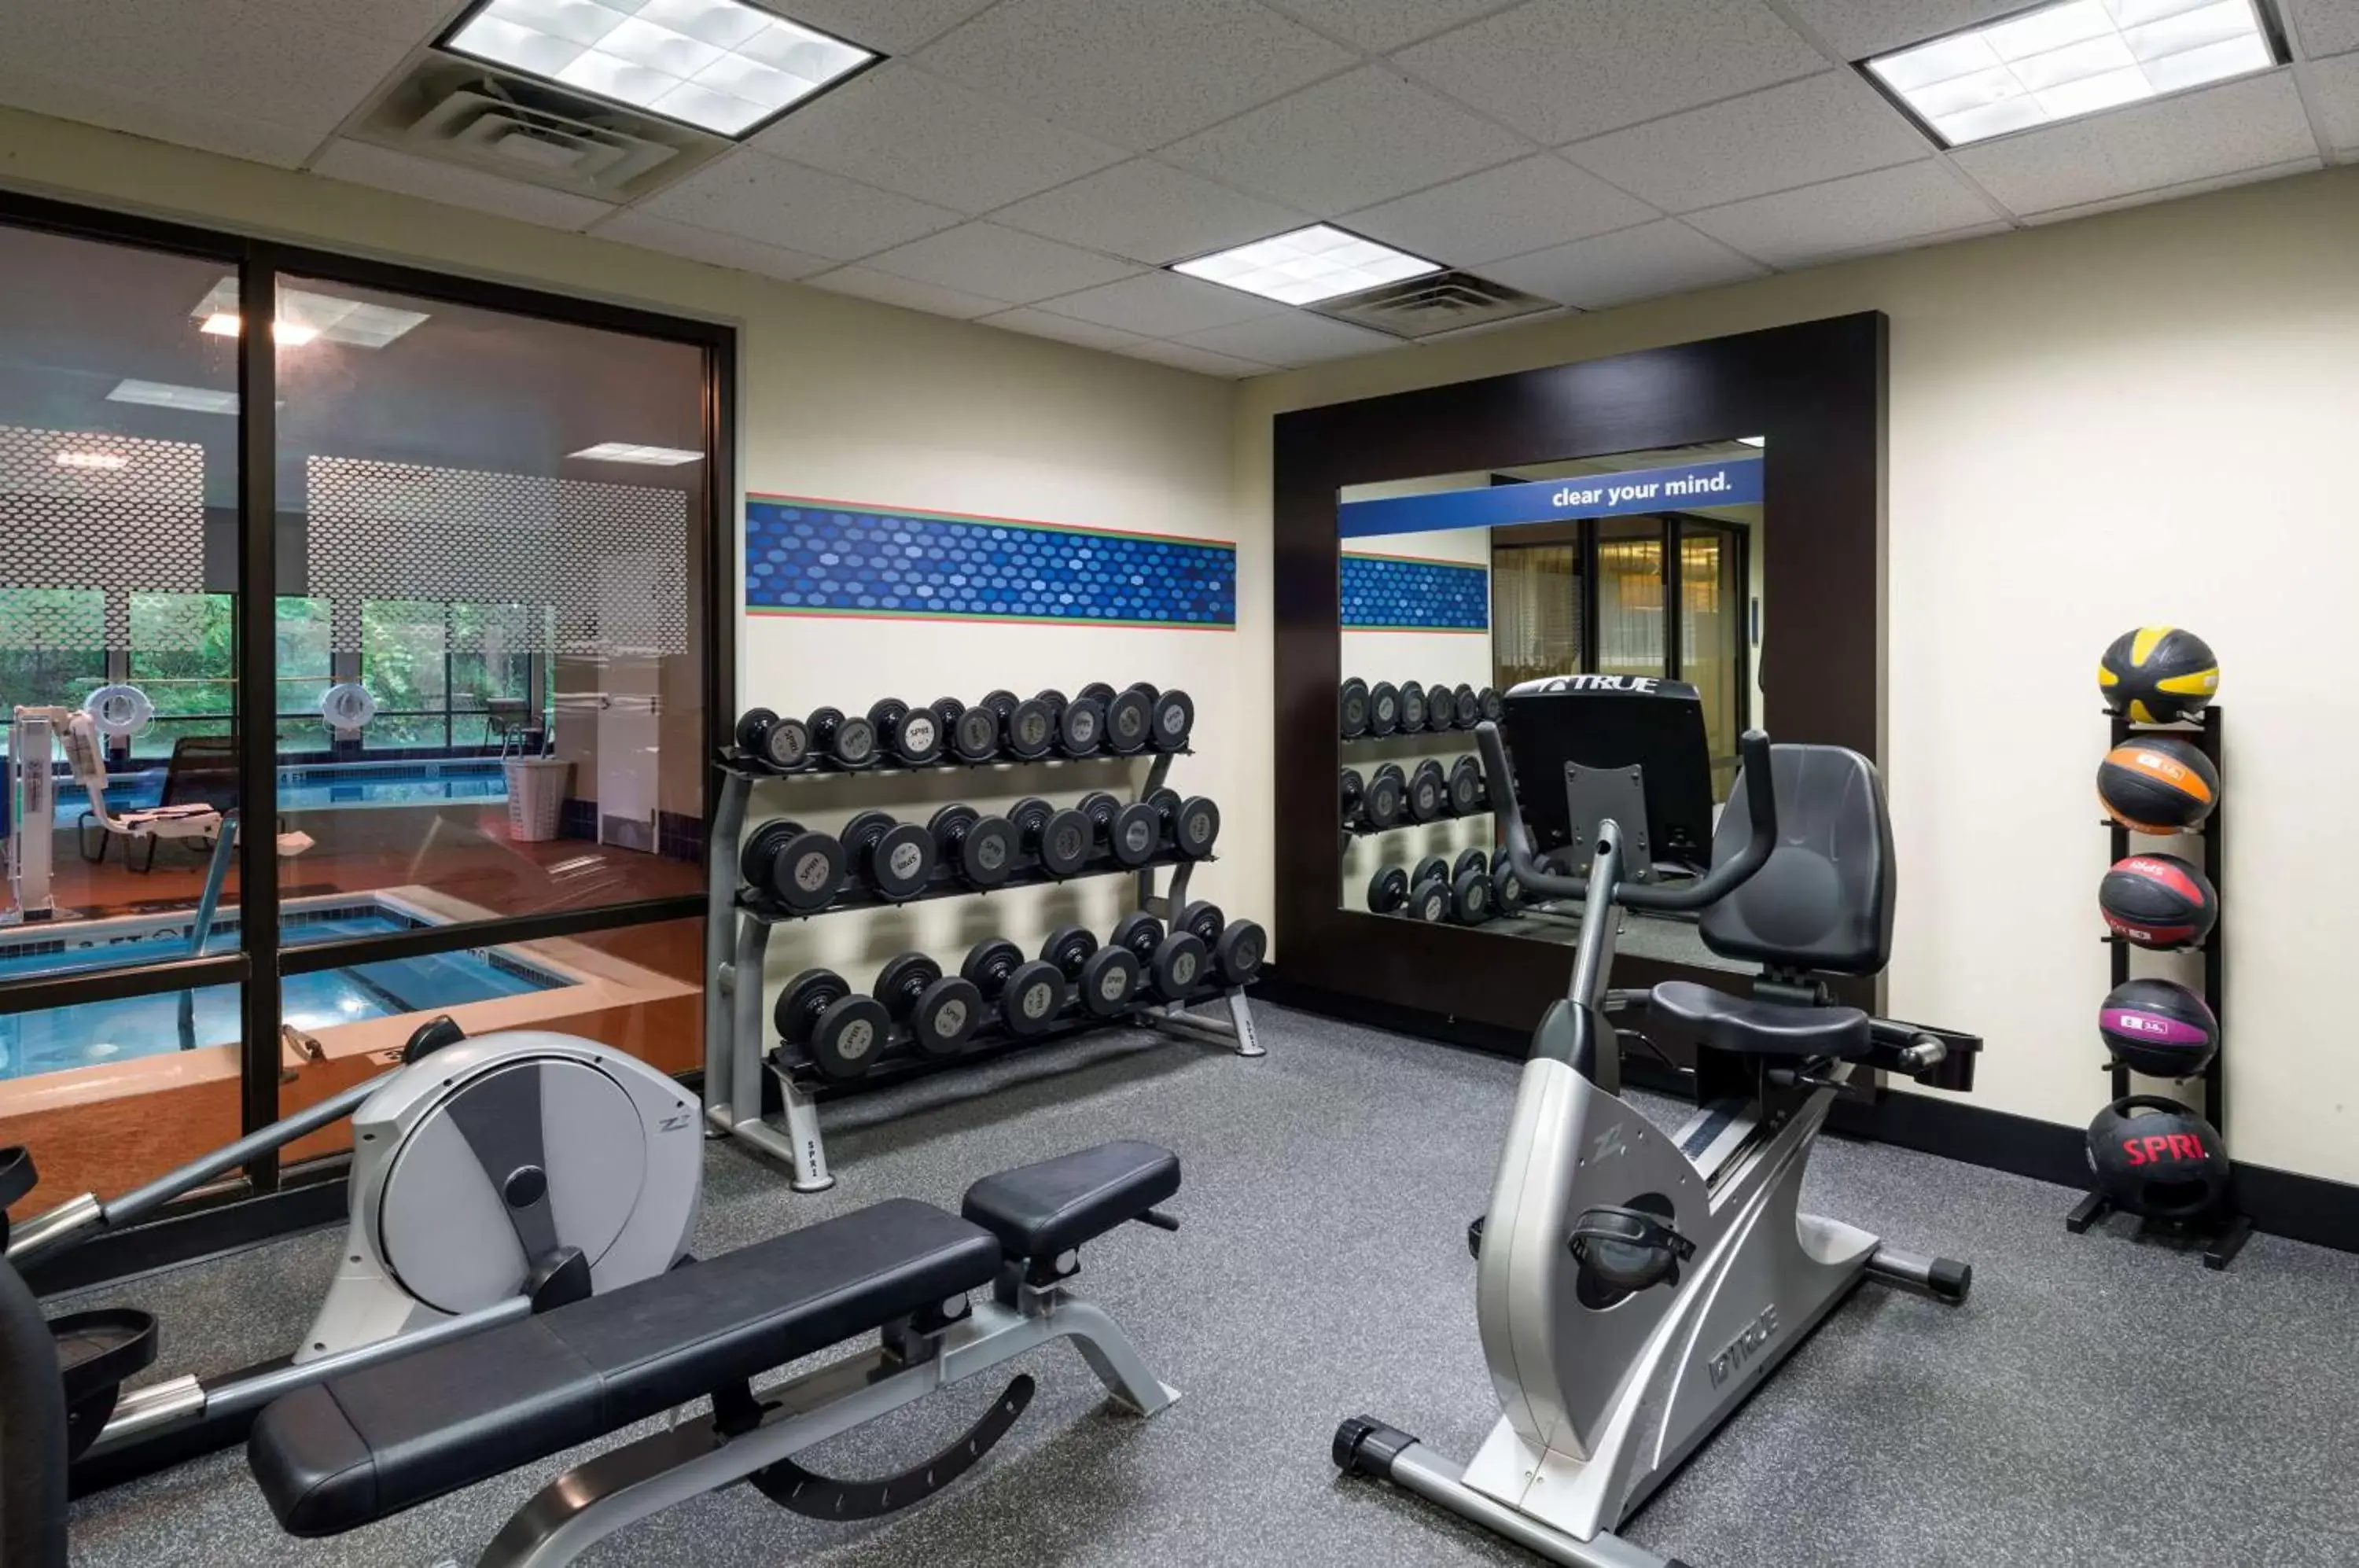 Fitness centre/facilities, Fitness Center/Facilities in Hampton Inn Selinsgrove/Shamokin Dam